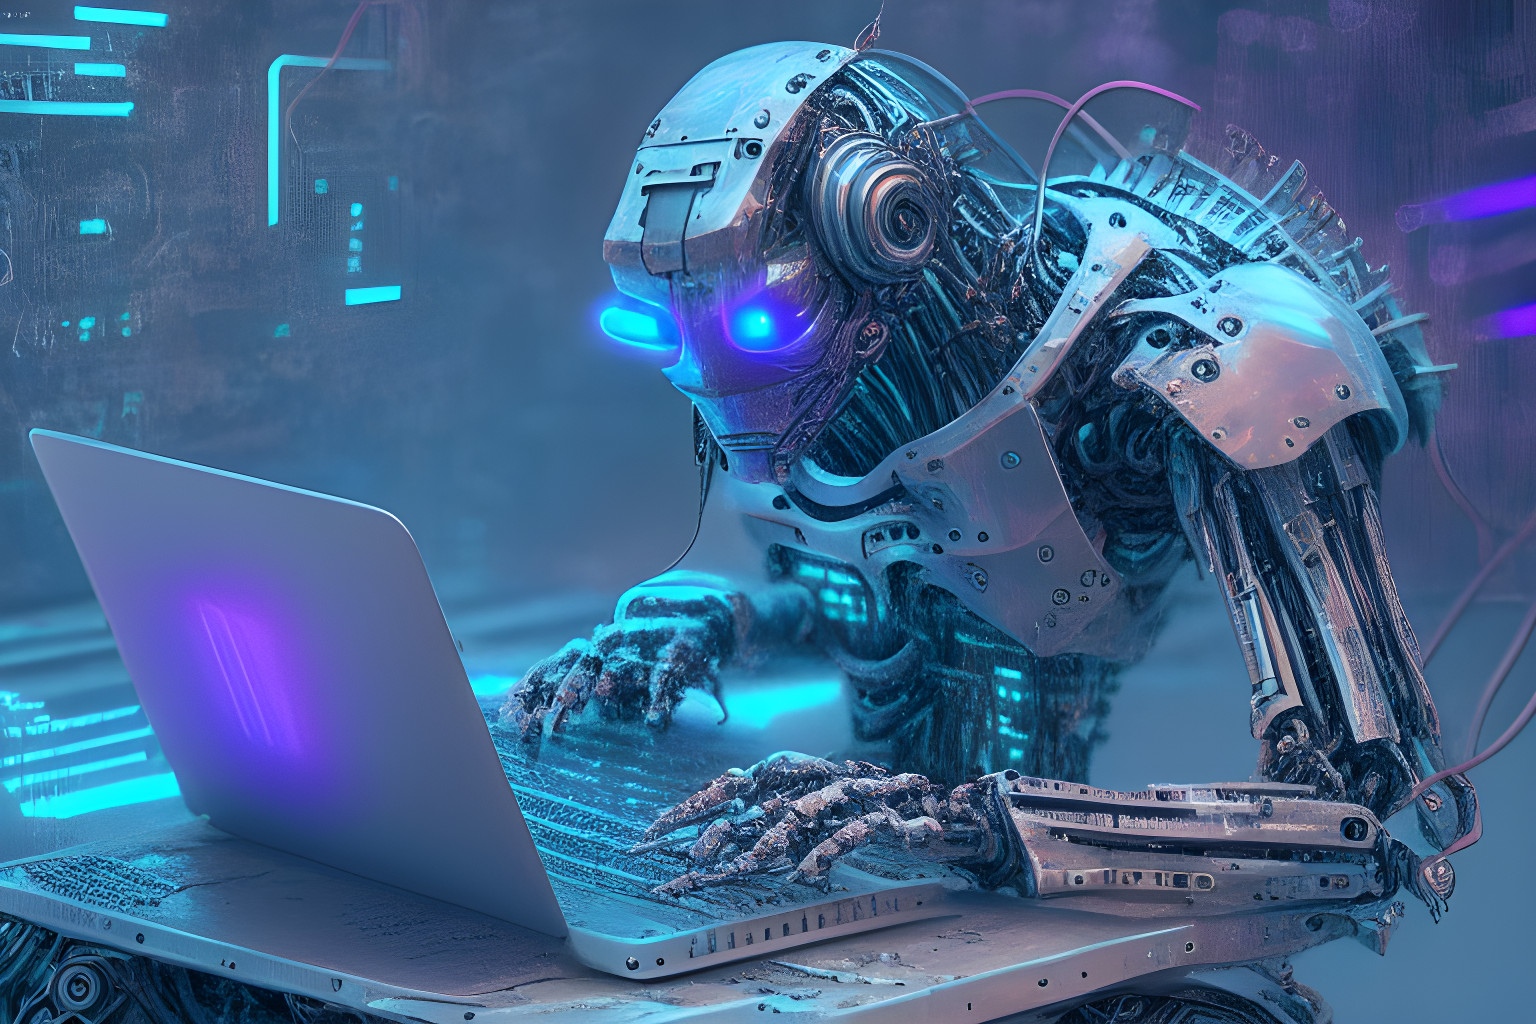 Cyberpunk, Futuristic AI Robot On A Laptop